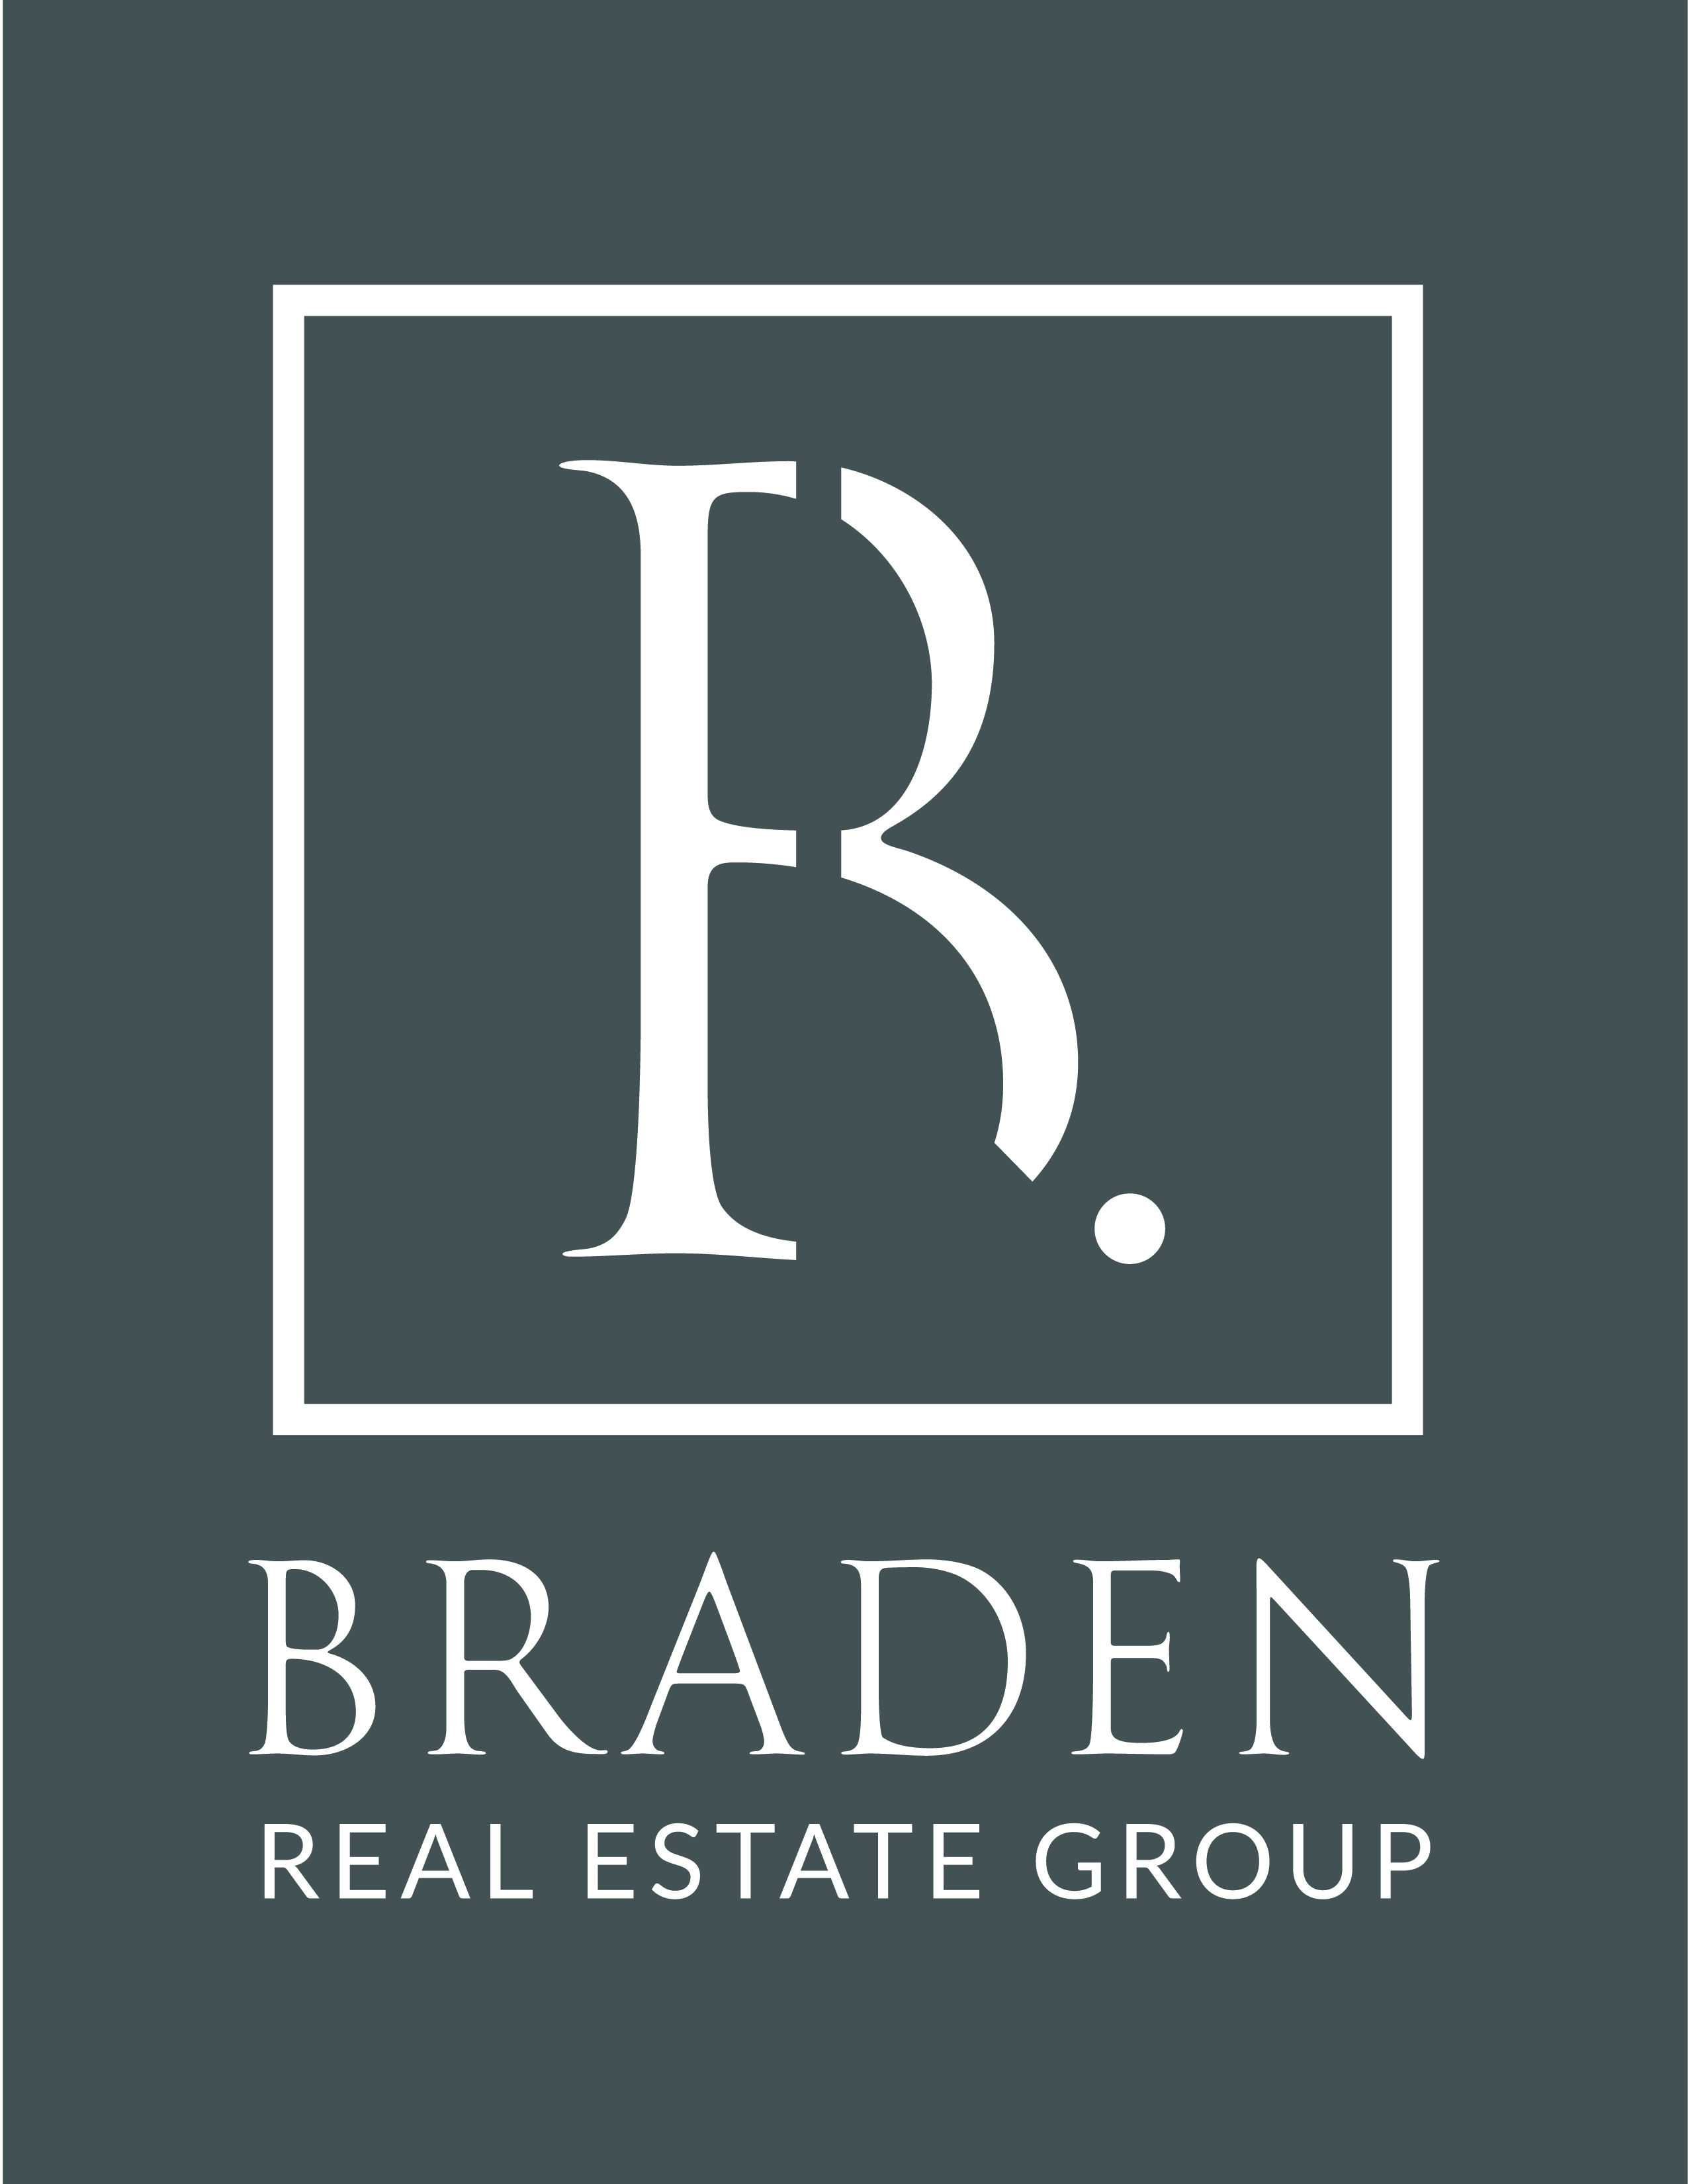 Braden Real Estate Group